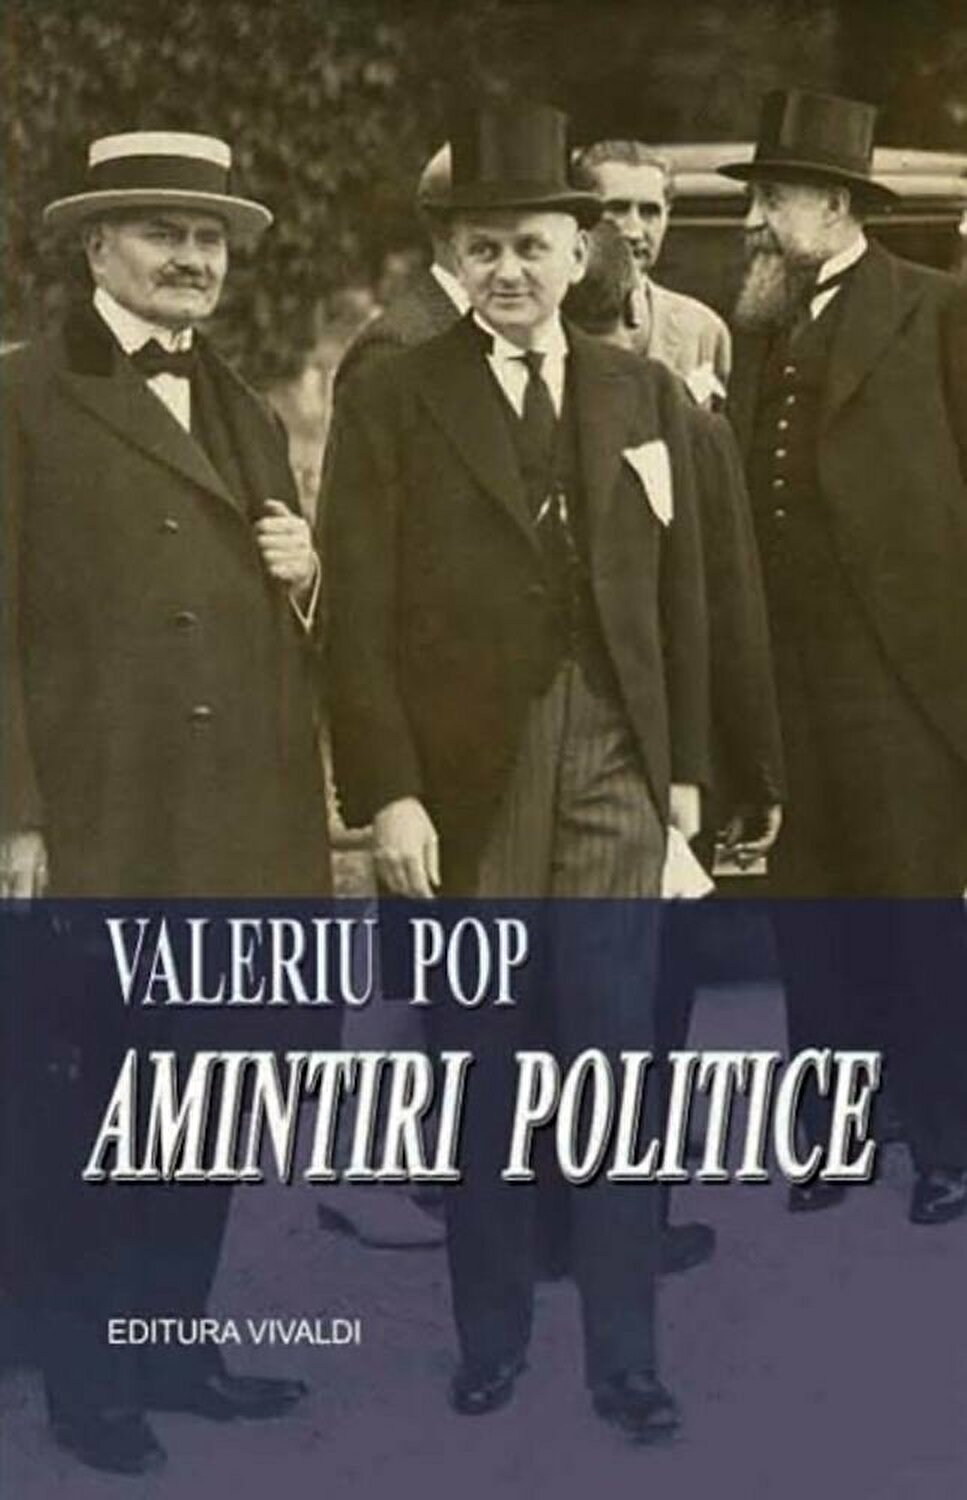 Amintiri politice | Valeriu Pop carturesti.ro Biografii, memorii, jurnale